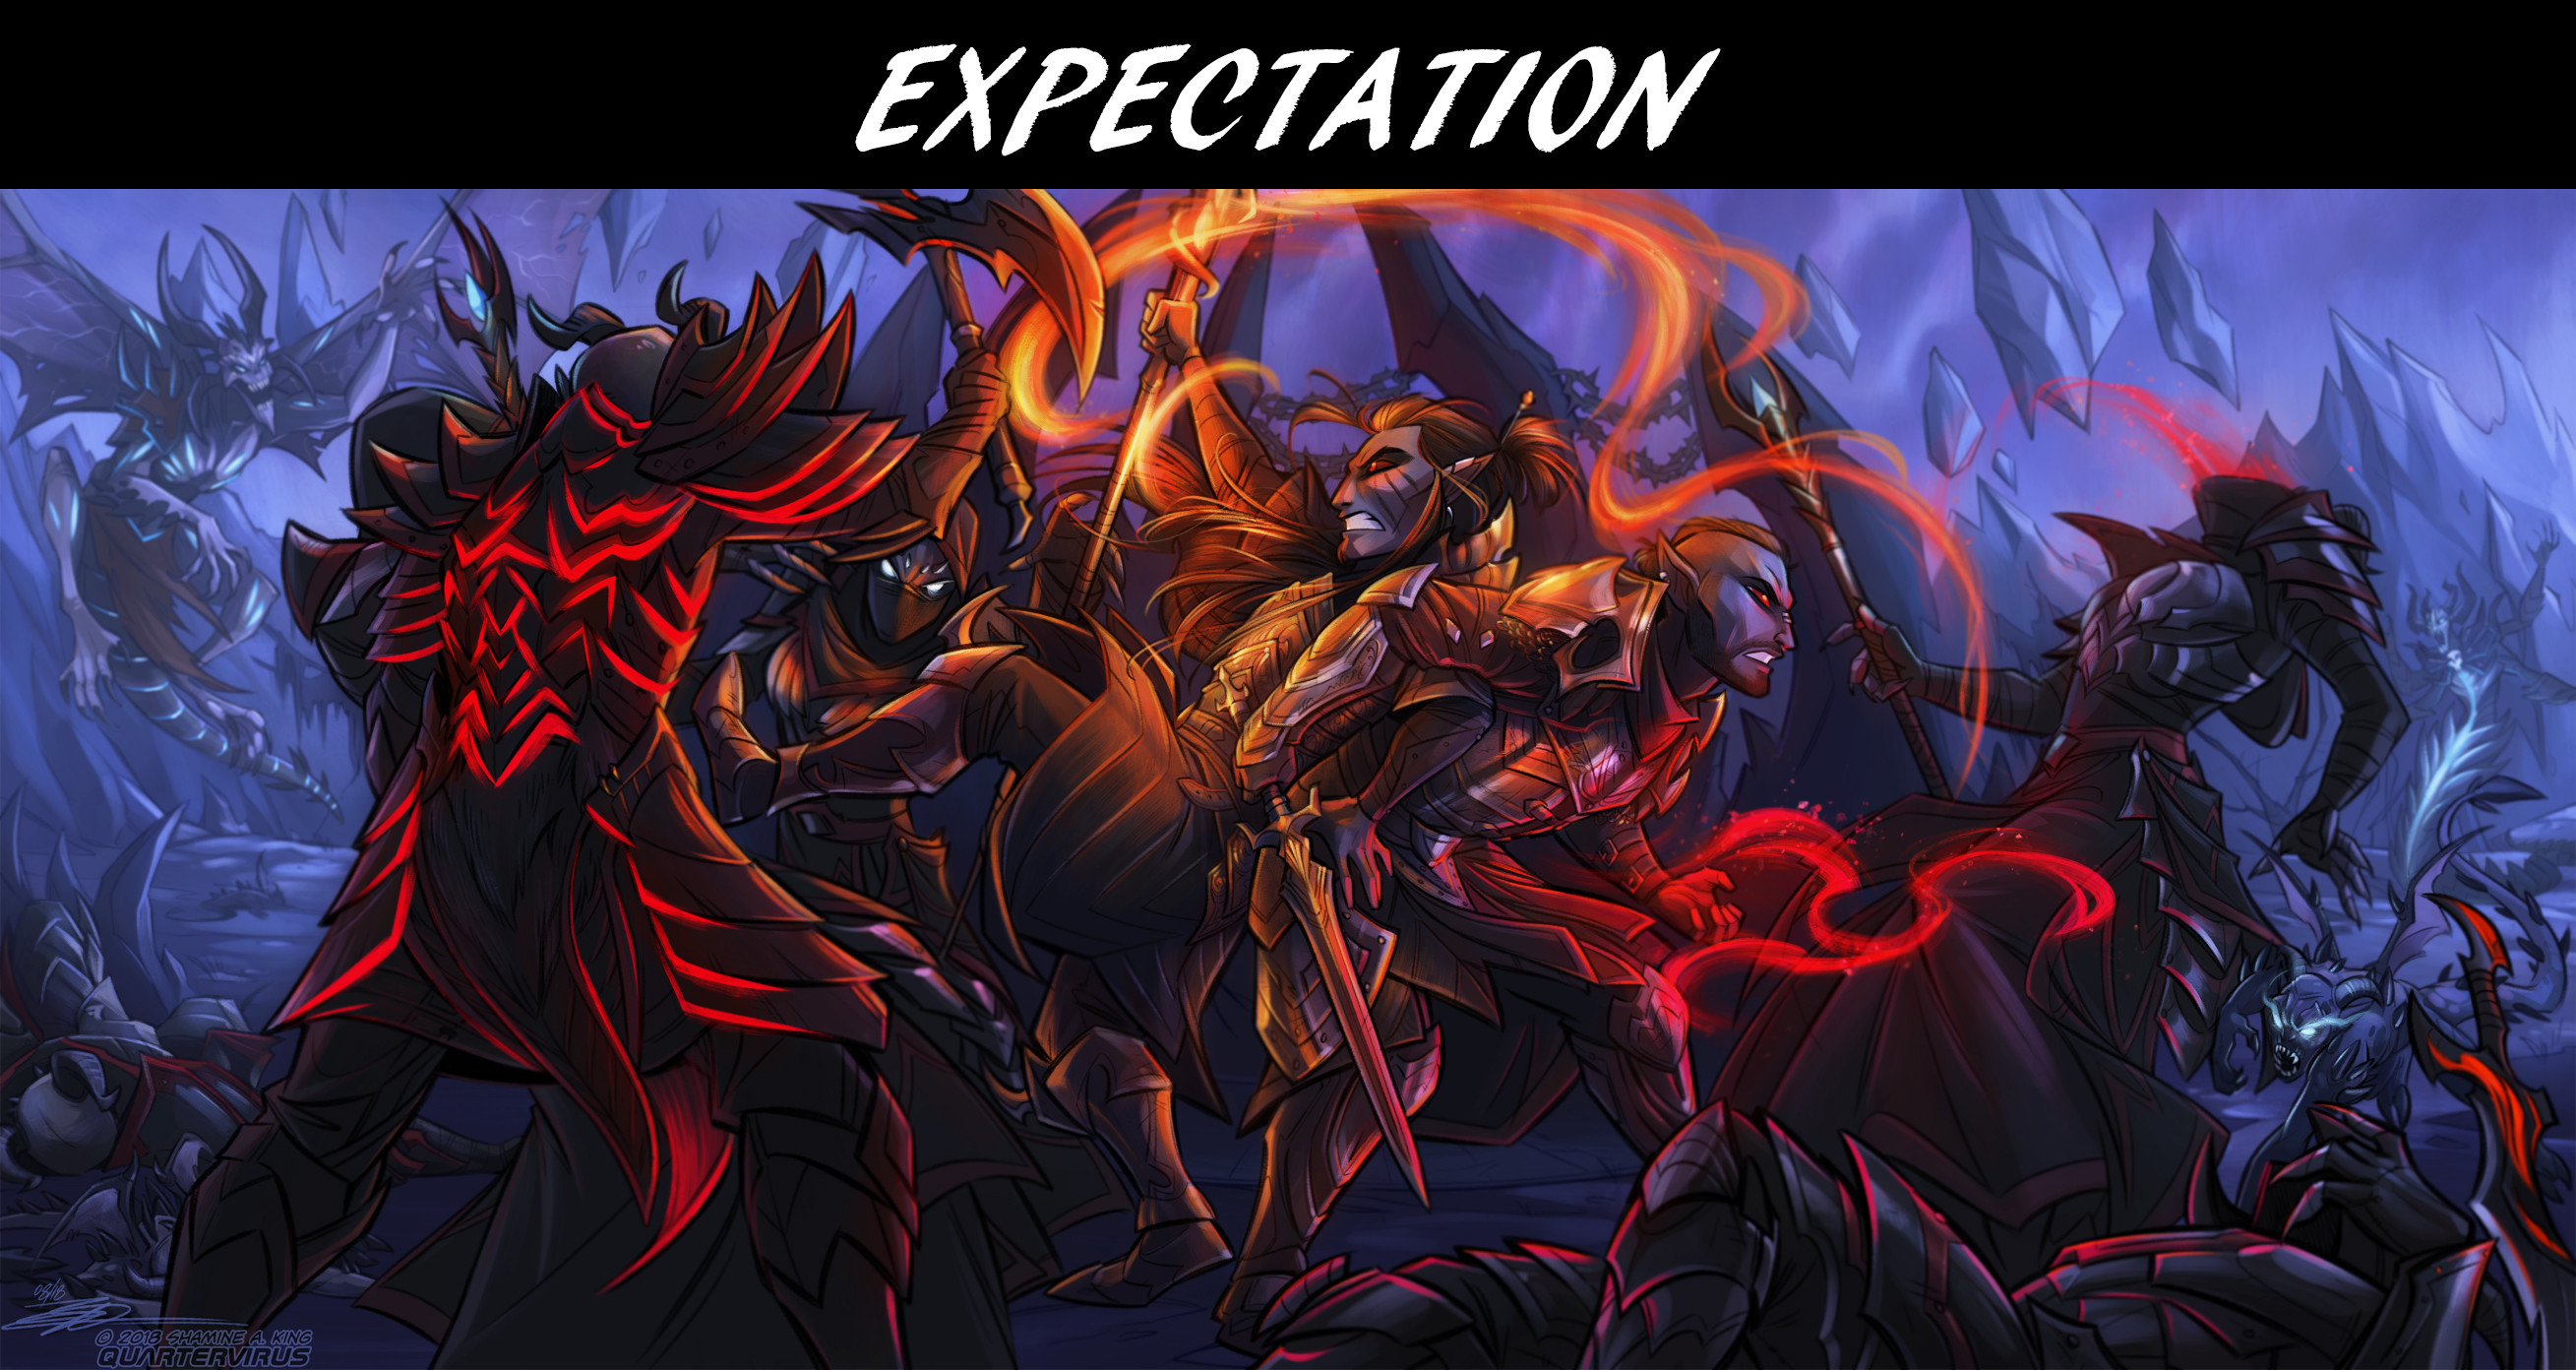 Expectation